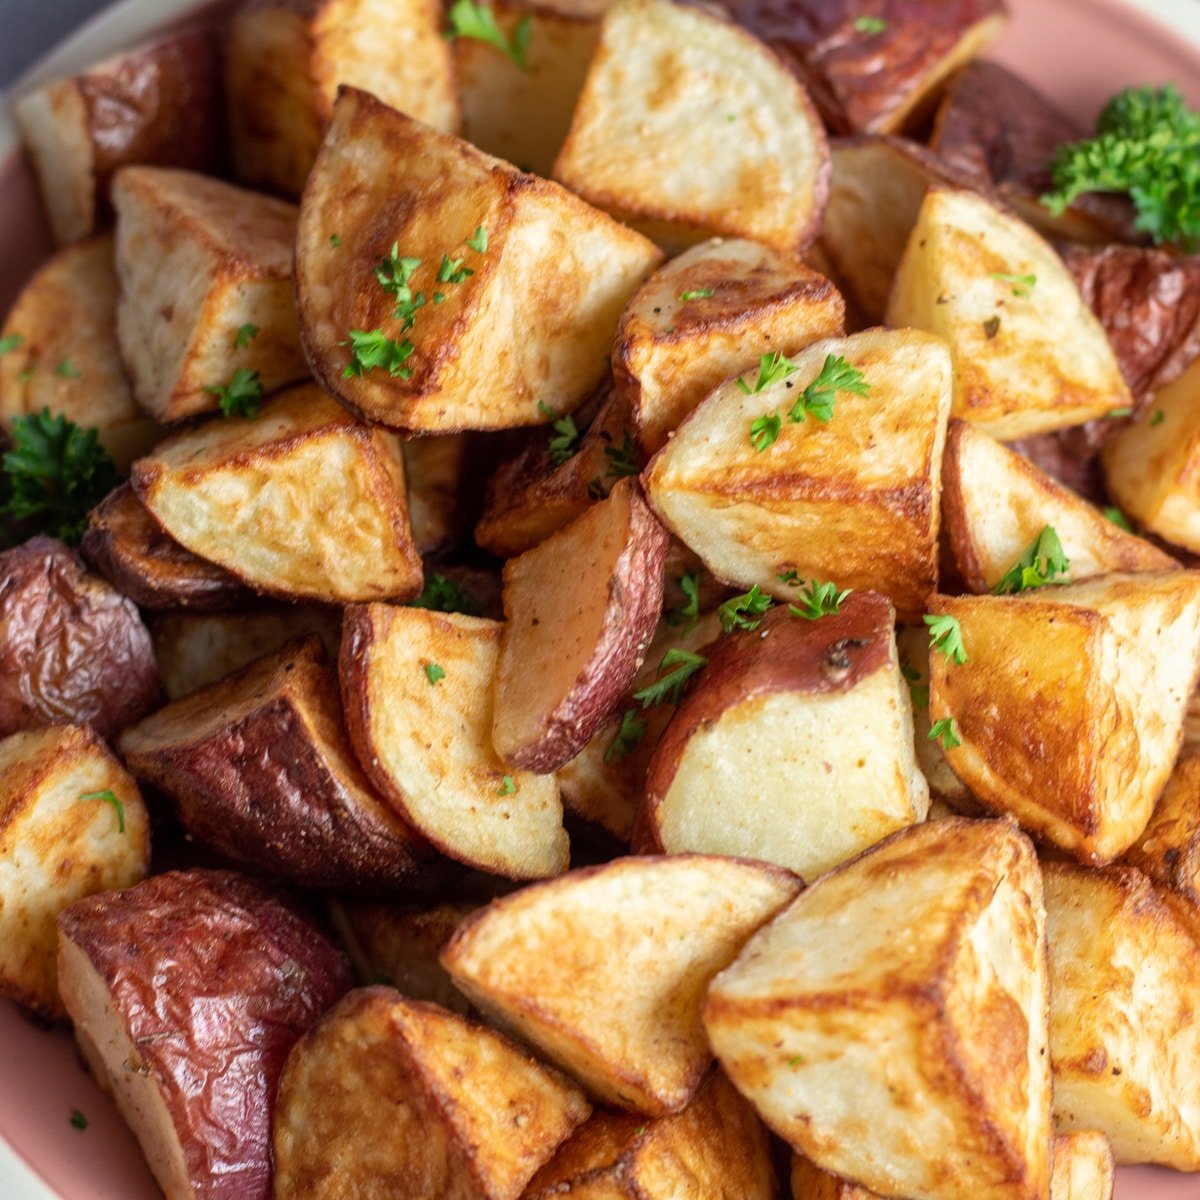 Savršeno hrskav pečeni crveni krumpir naslagani na tanjur za posluživanje.